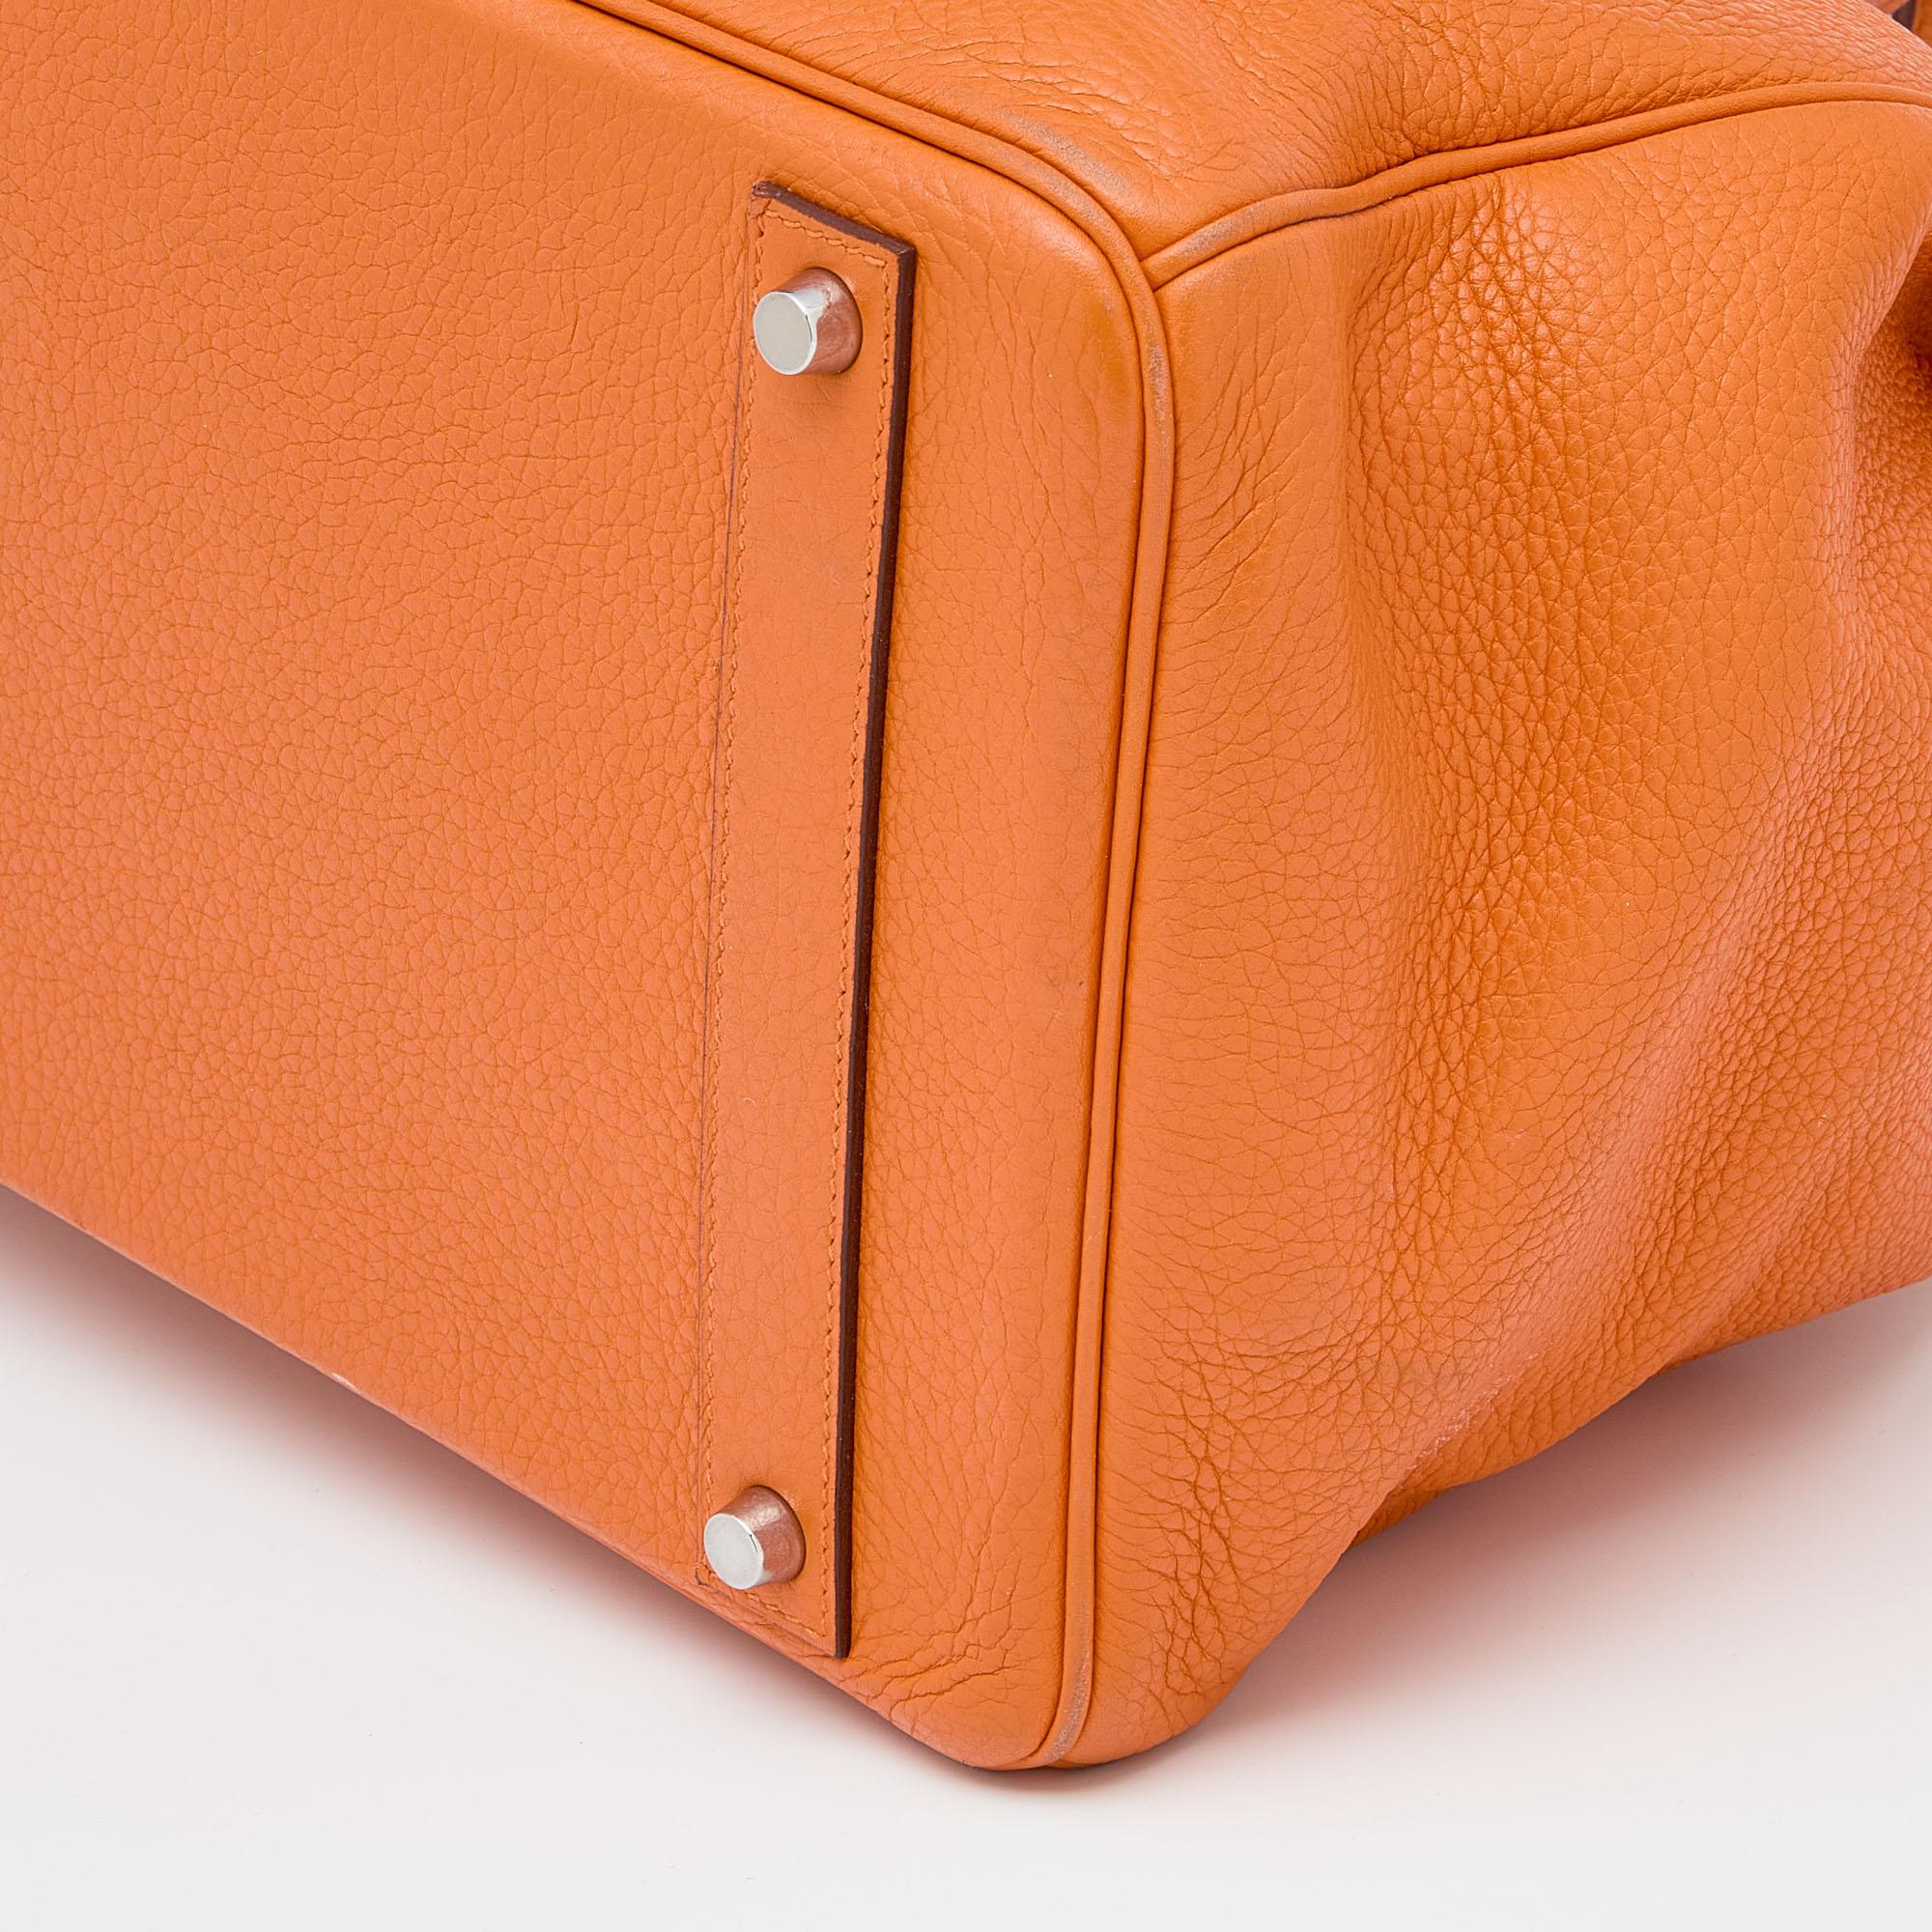 Hermès Orange Togo Leather Palladium Plated Birkin 40 Bag 5